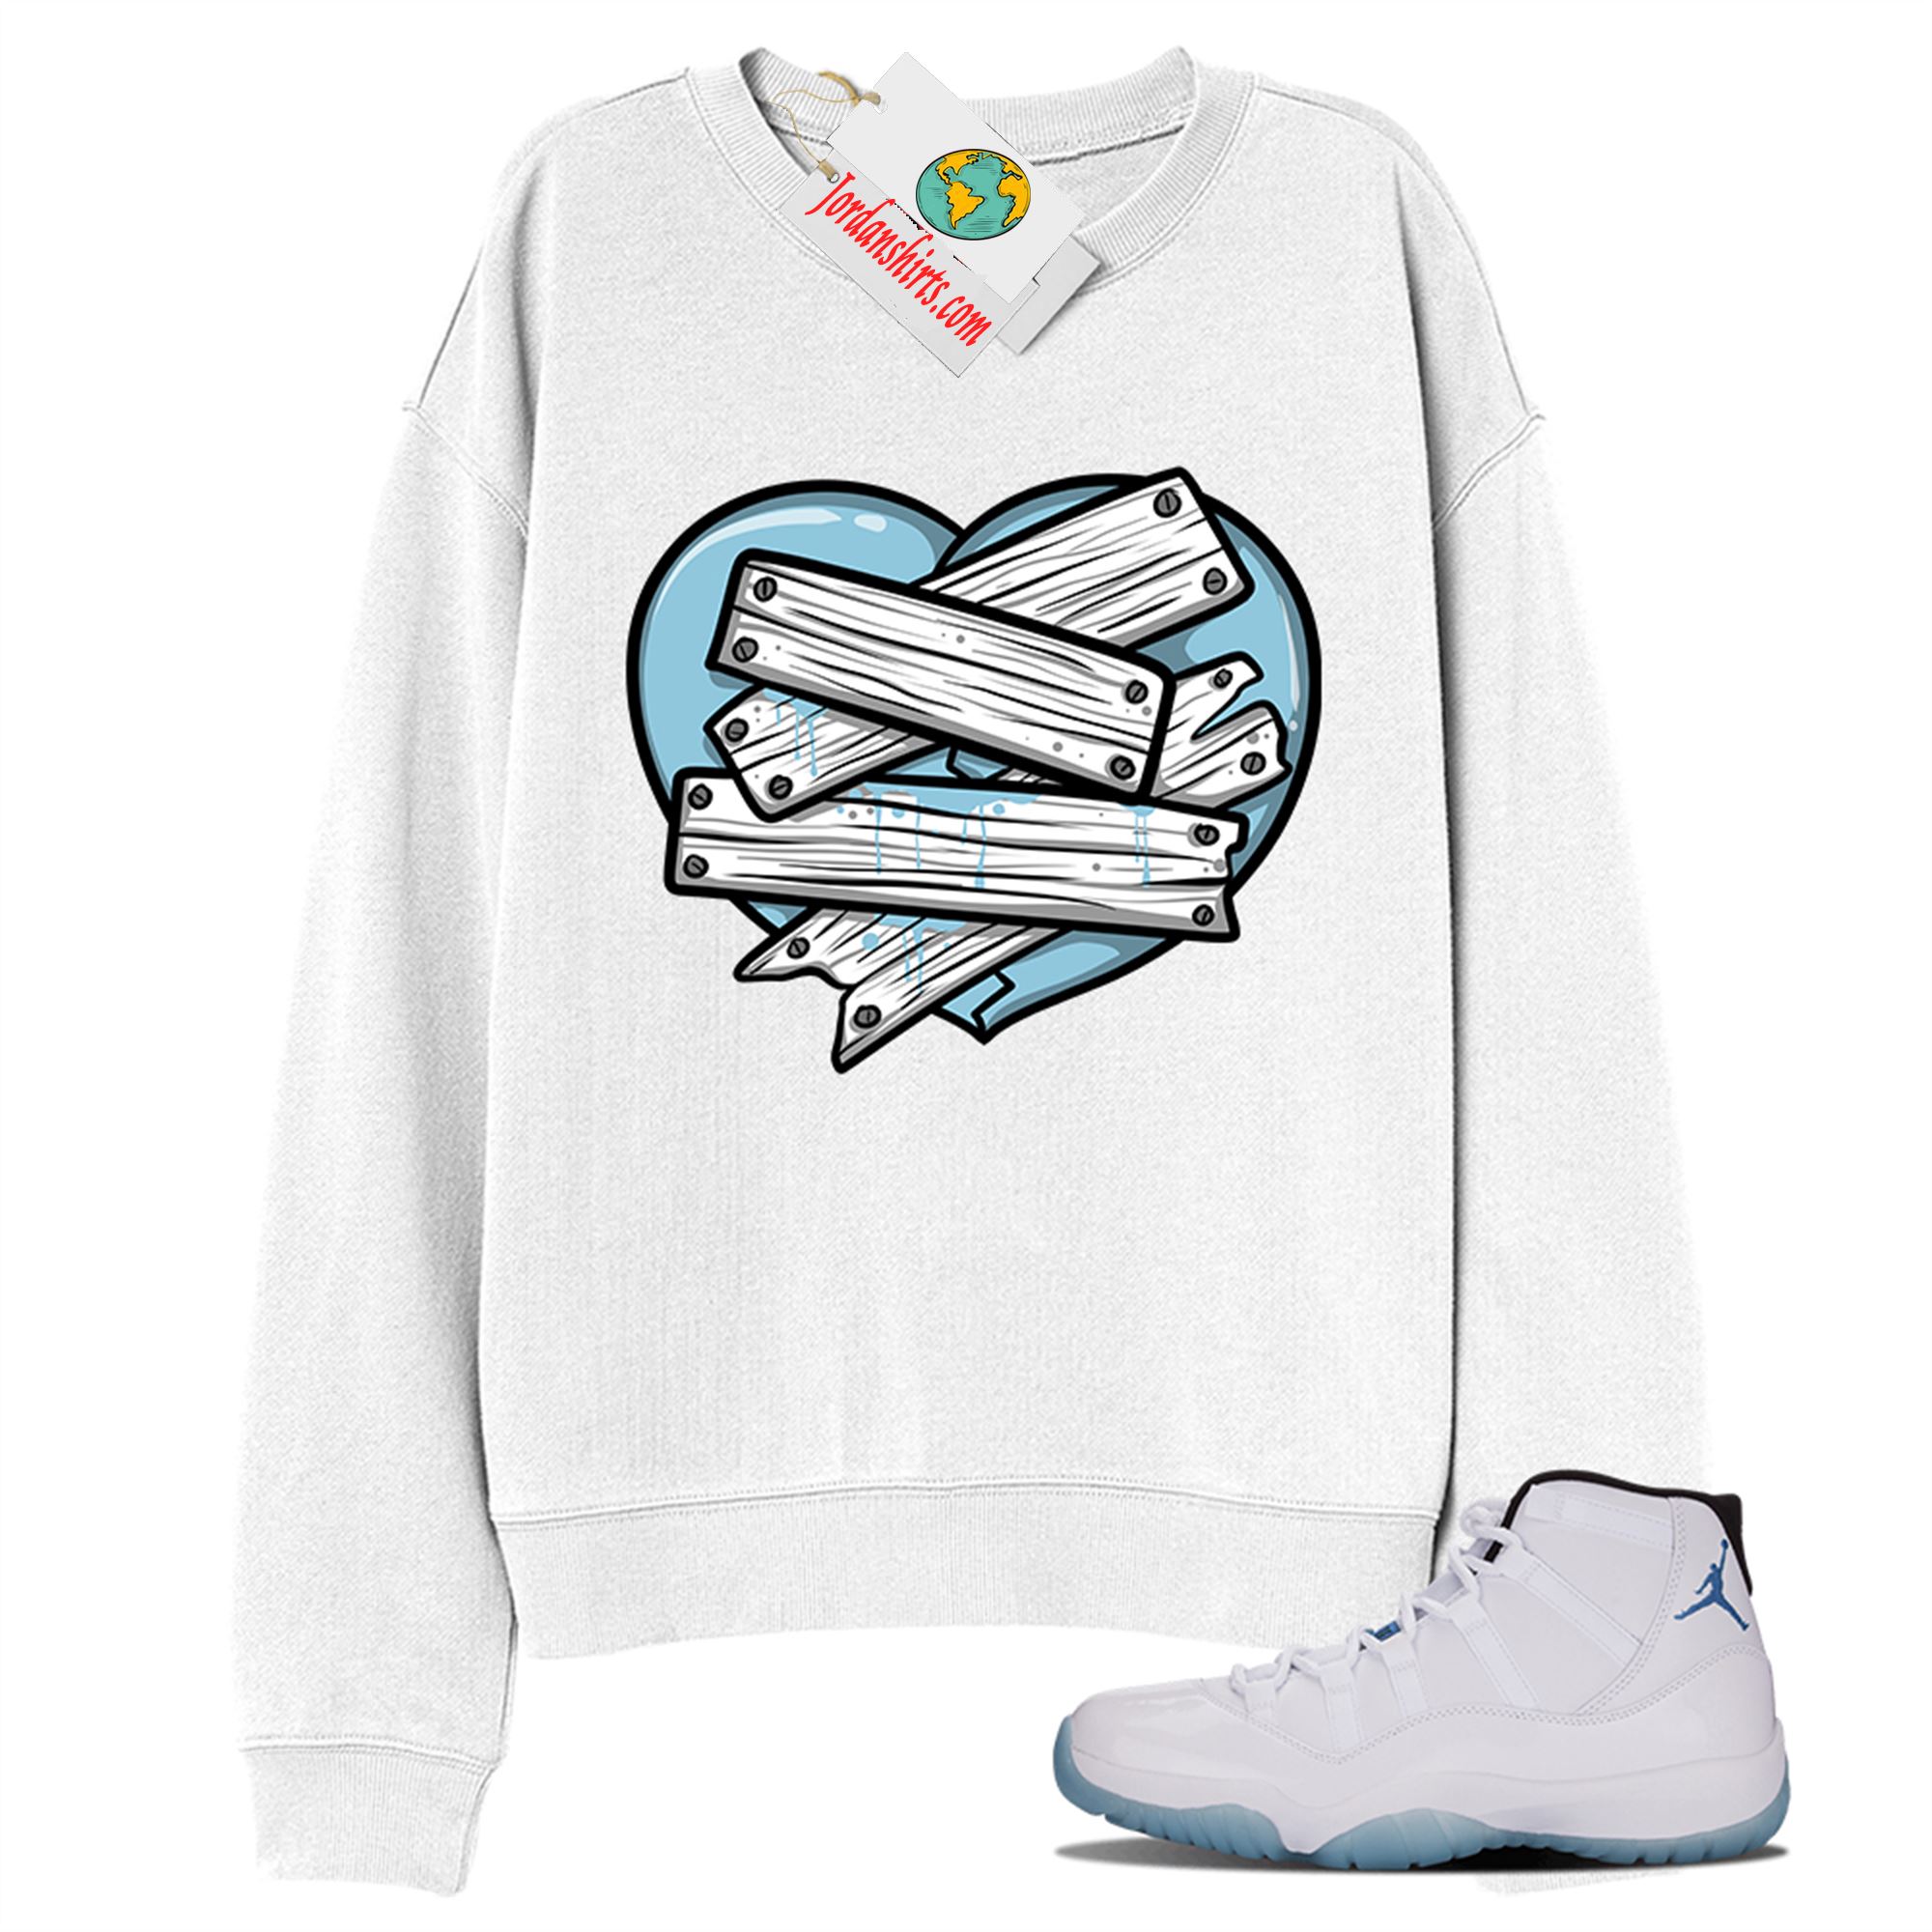 Jordan 11 Sweatshirt, Patch Love Broken Heart White Sweatshirt Air Jordan 11 Legend Blue 11s Full Size Up To 5xl